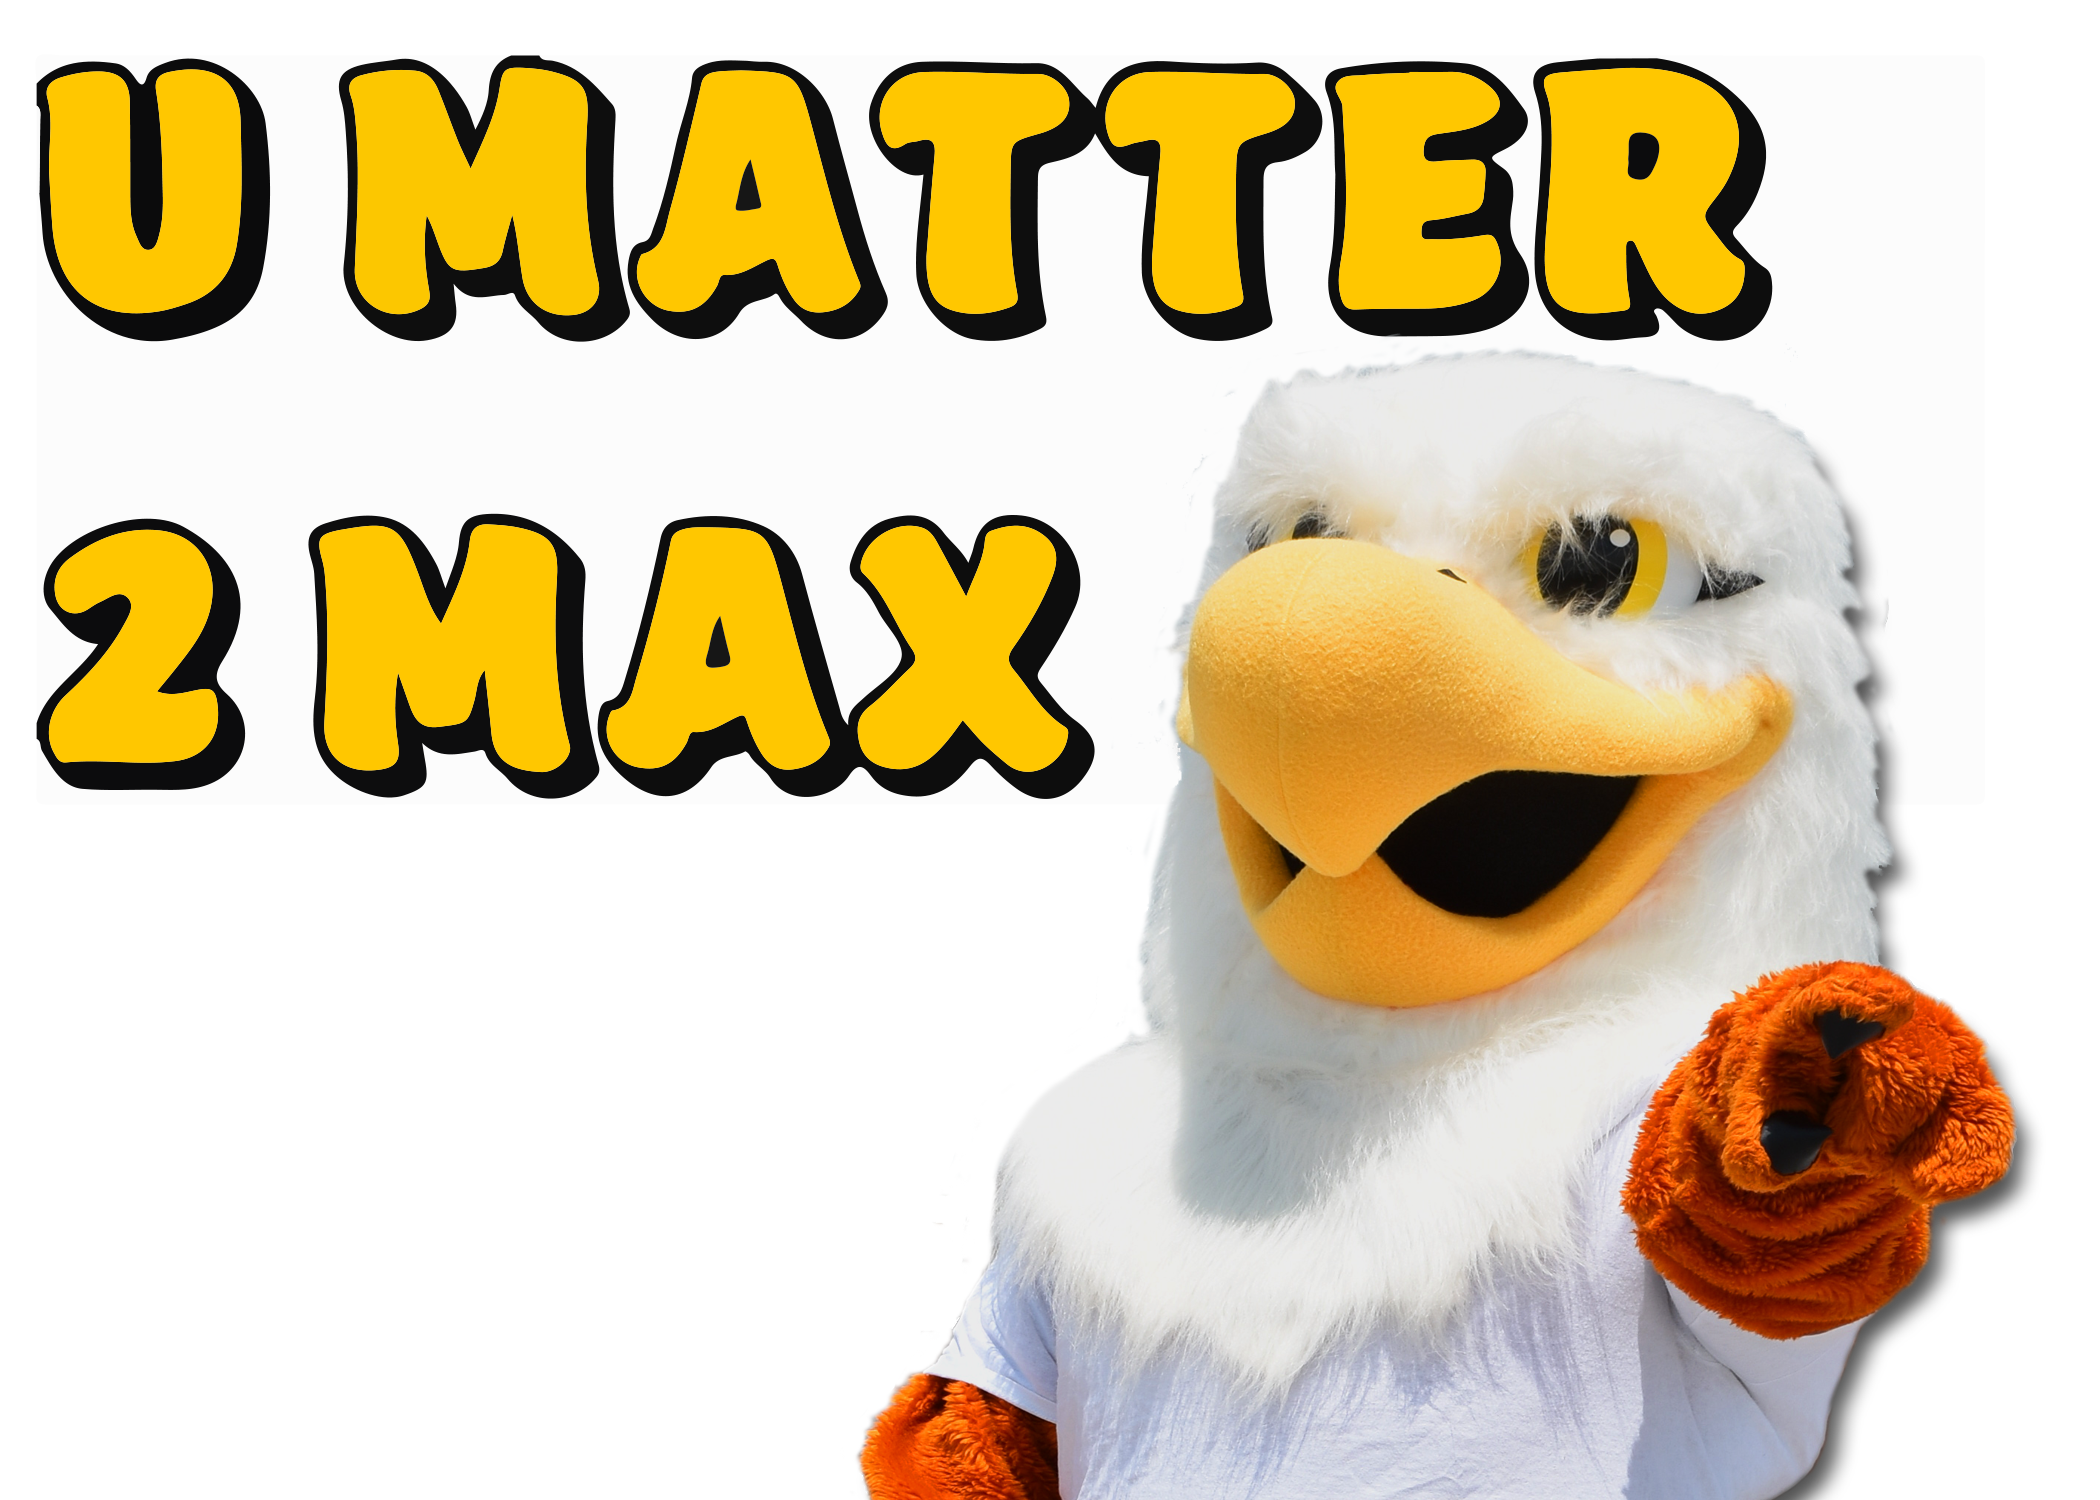 U Matter 2 Max